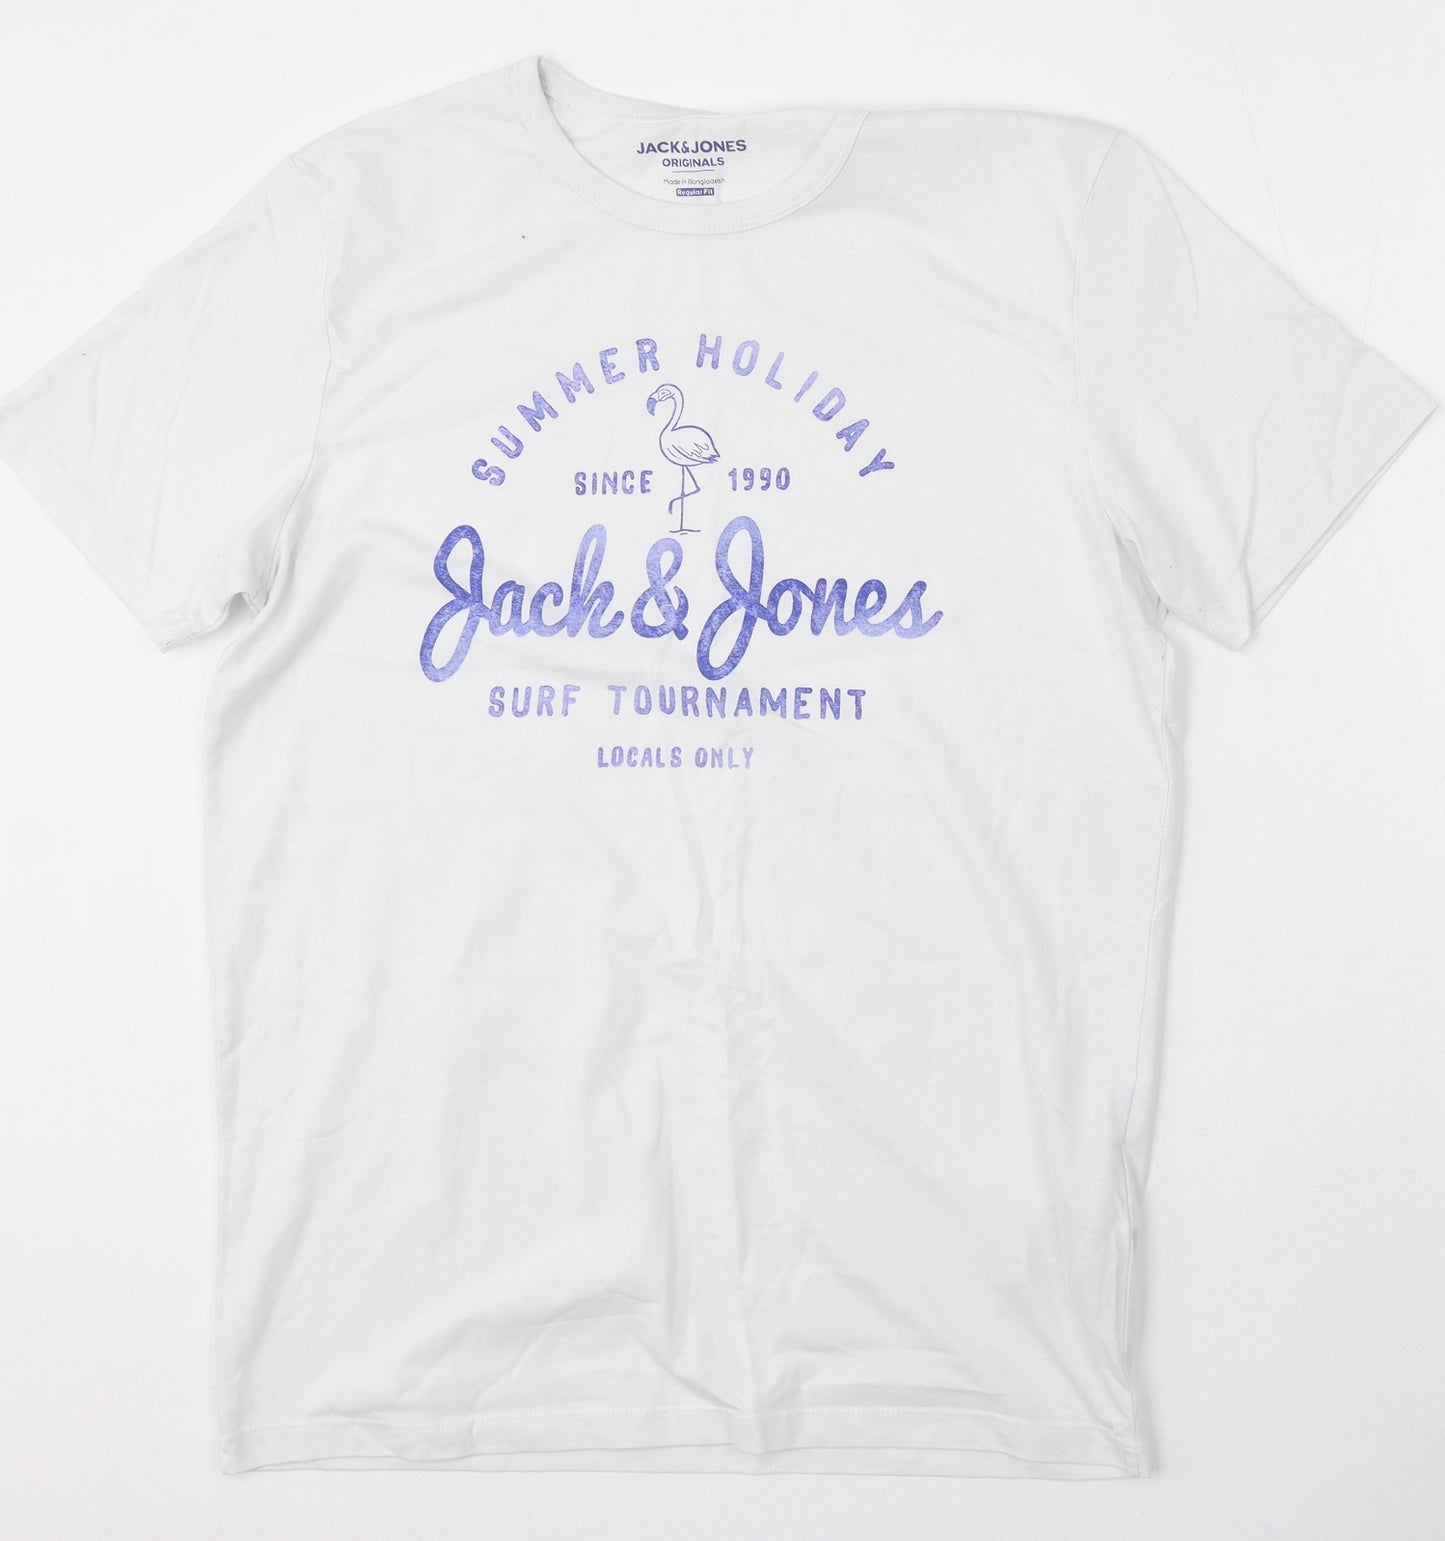 JACK & JONES Mens White Cotton T-Shirt Size M Round Neck - Summer Holiday Surf Tournament